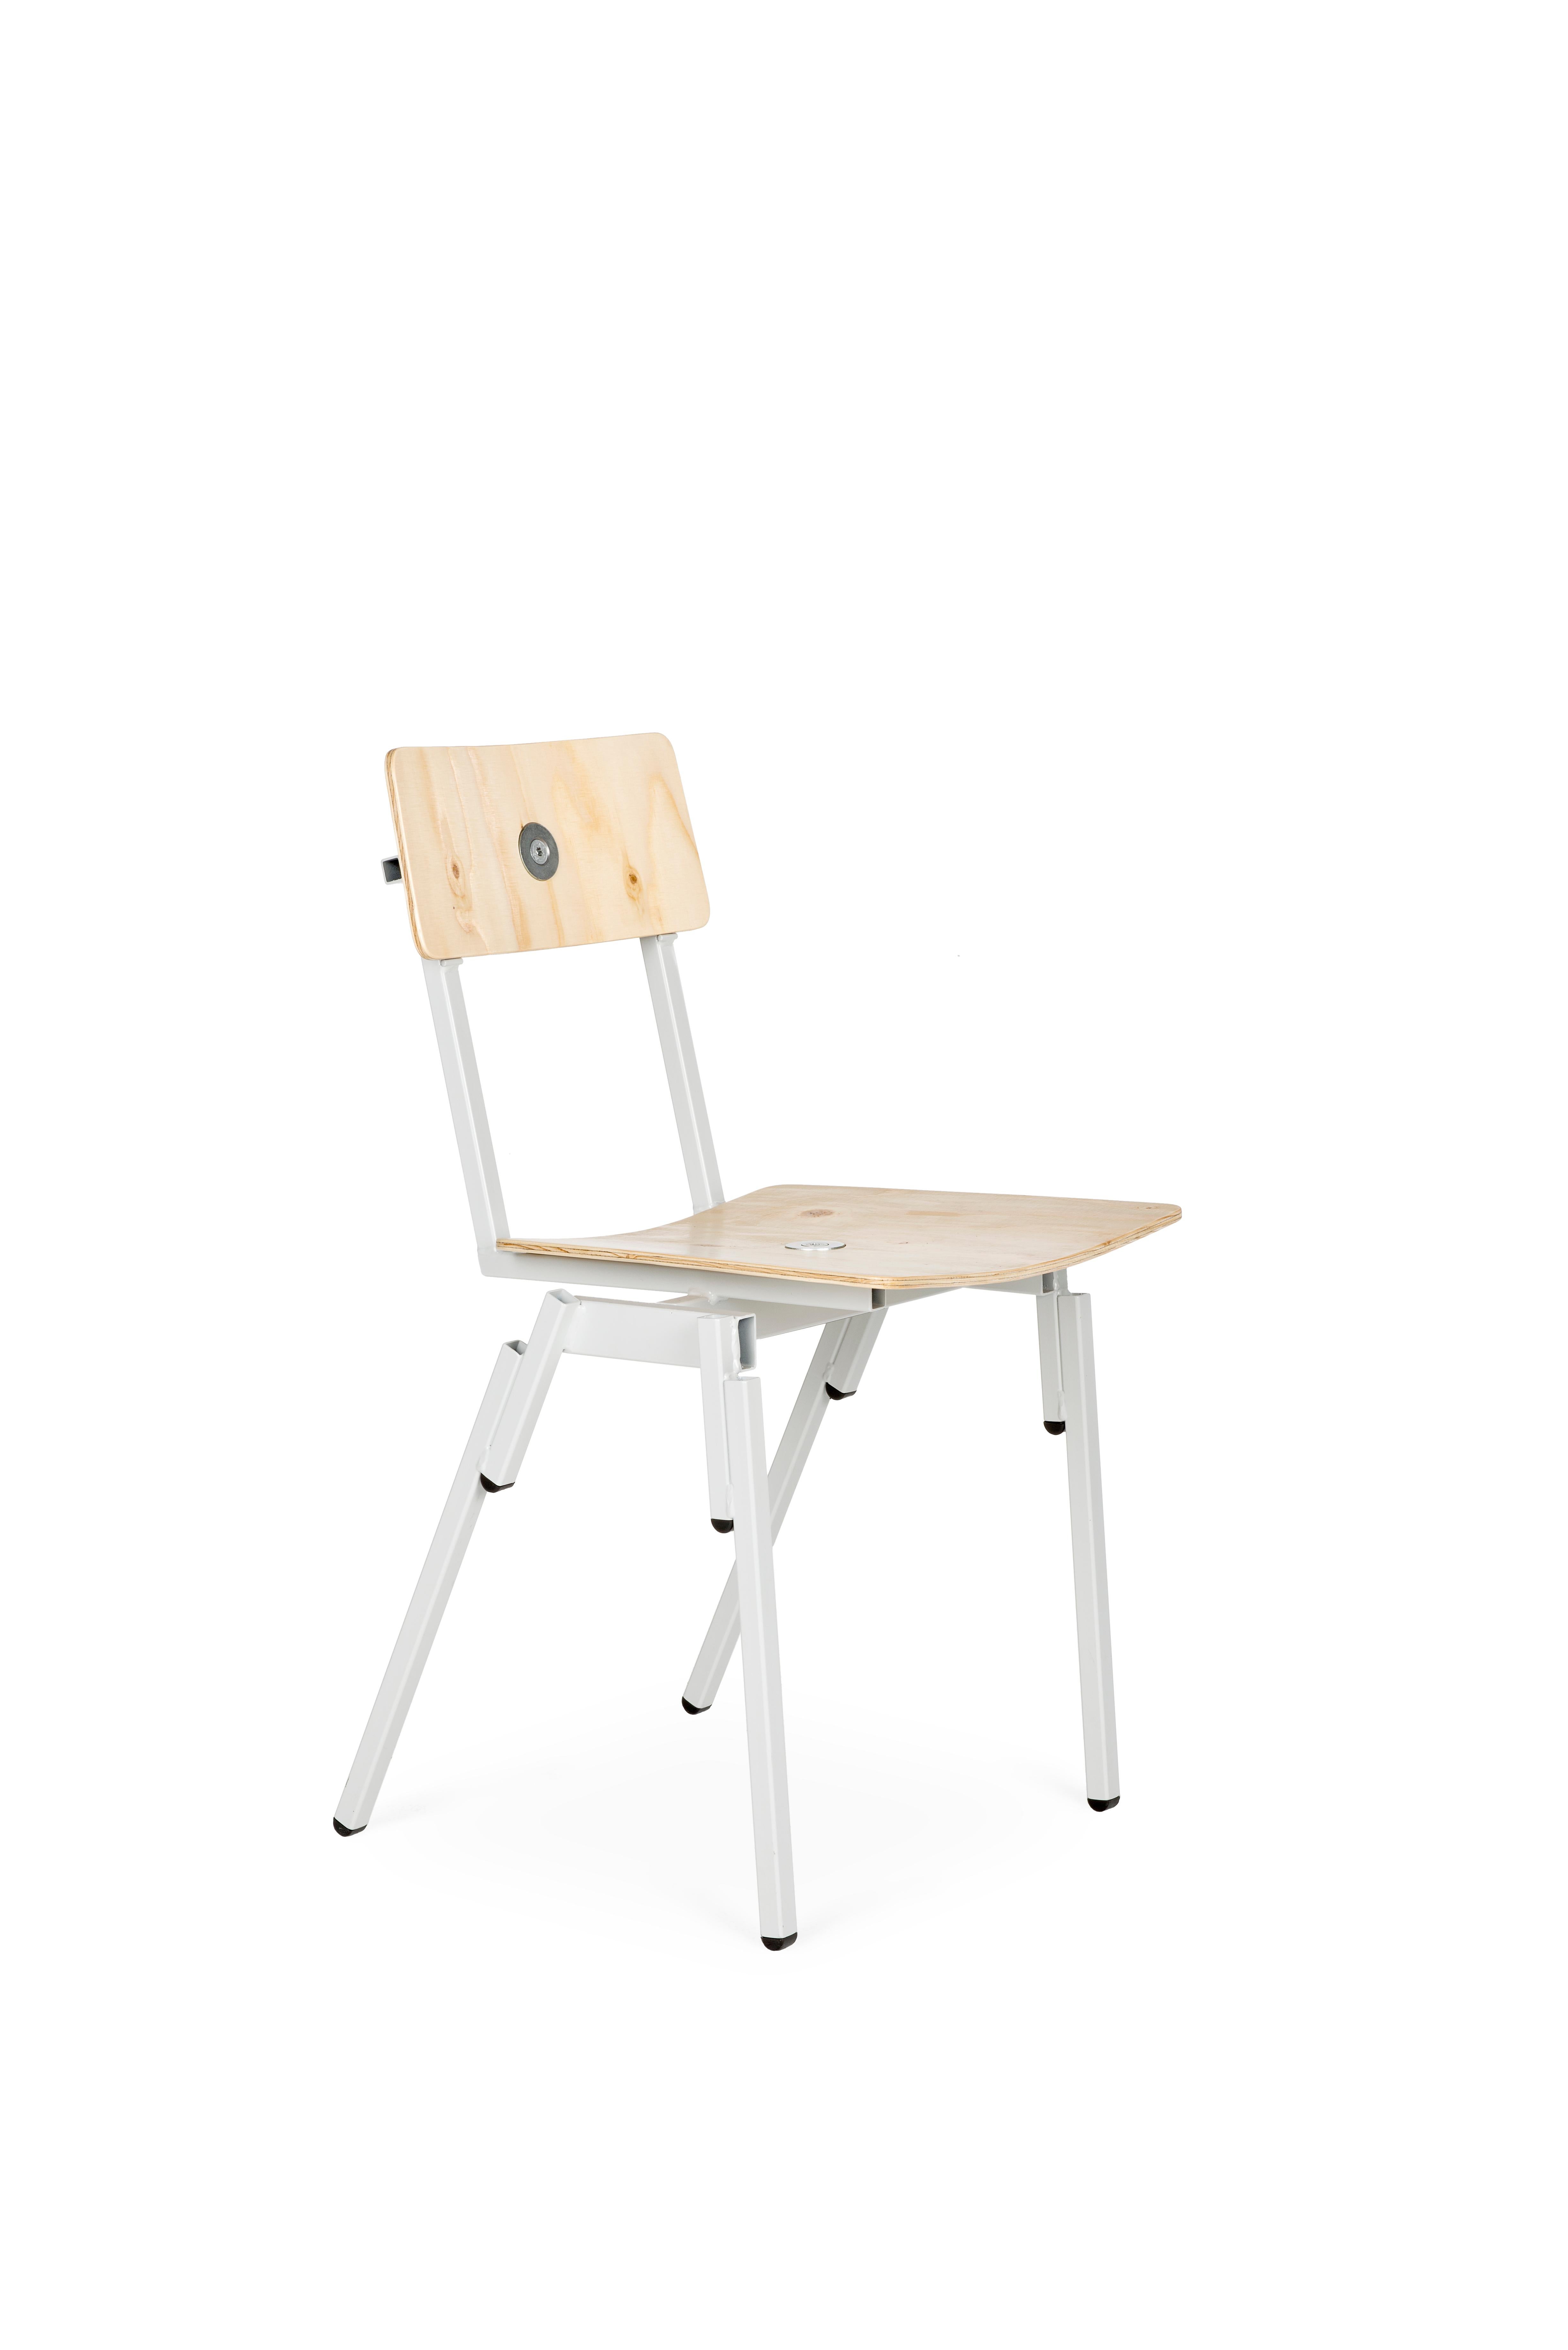 Stackable chair designed by Piet Hein Eek.
 